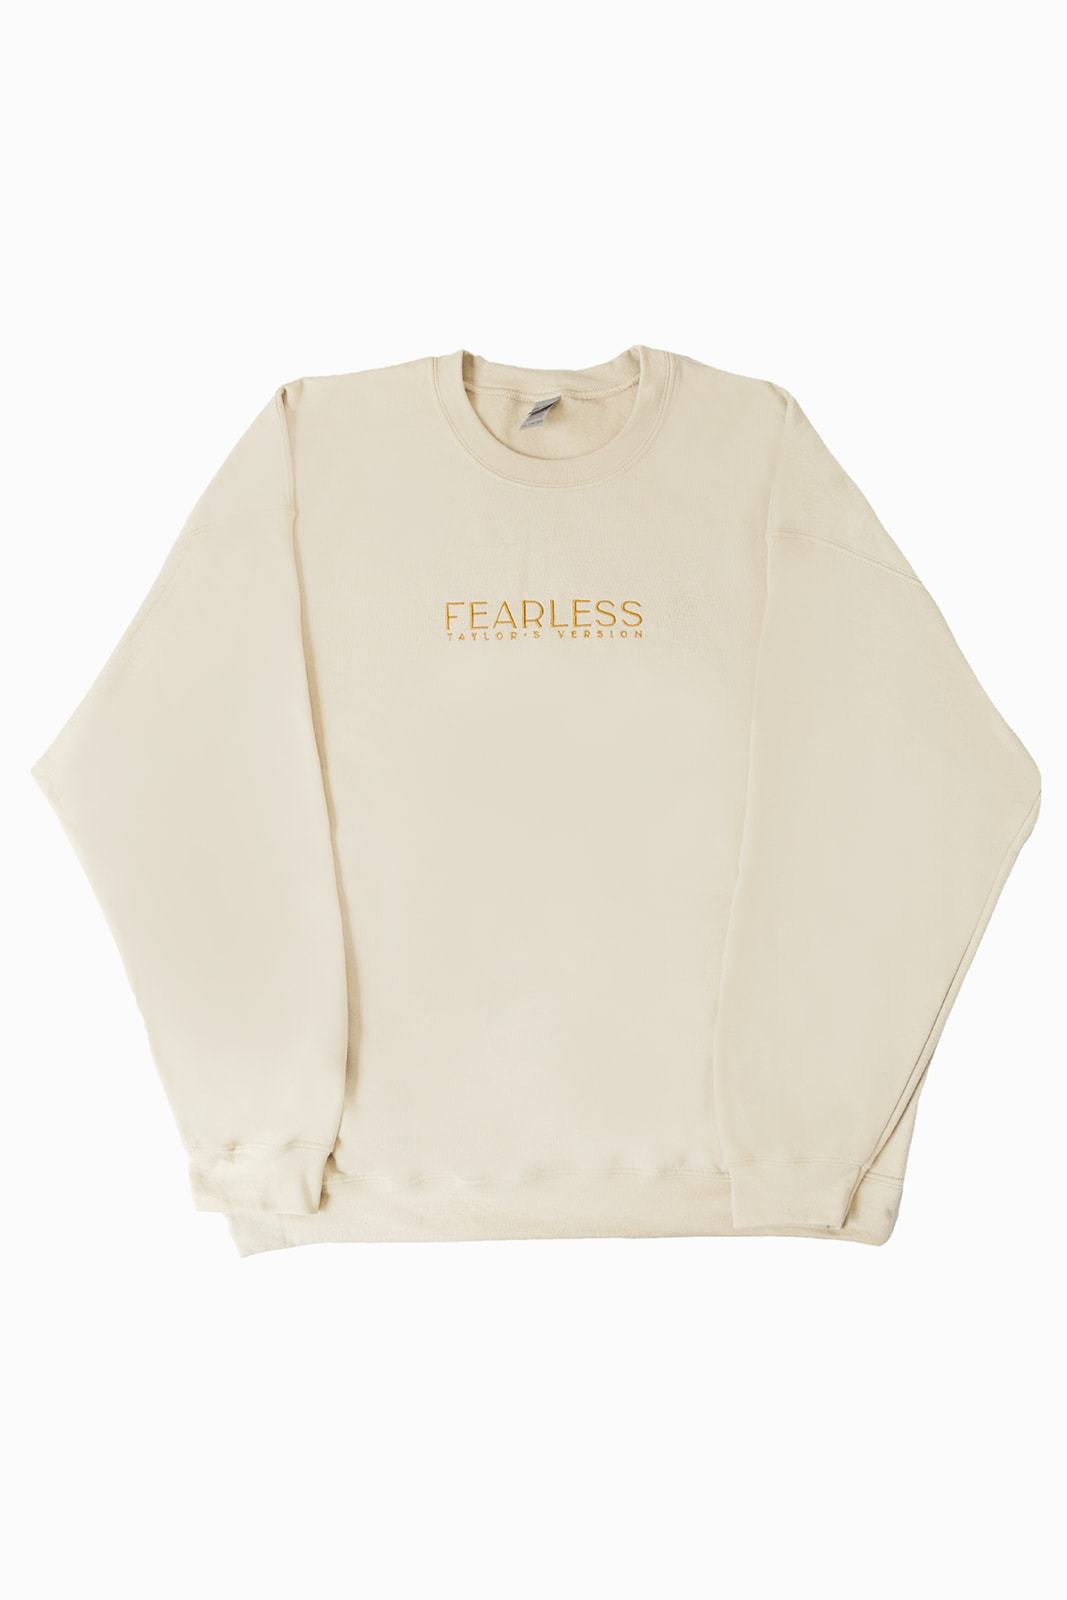 Fearless Sweatshirt - Emacity Threads